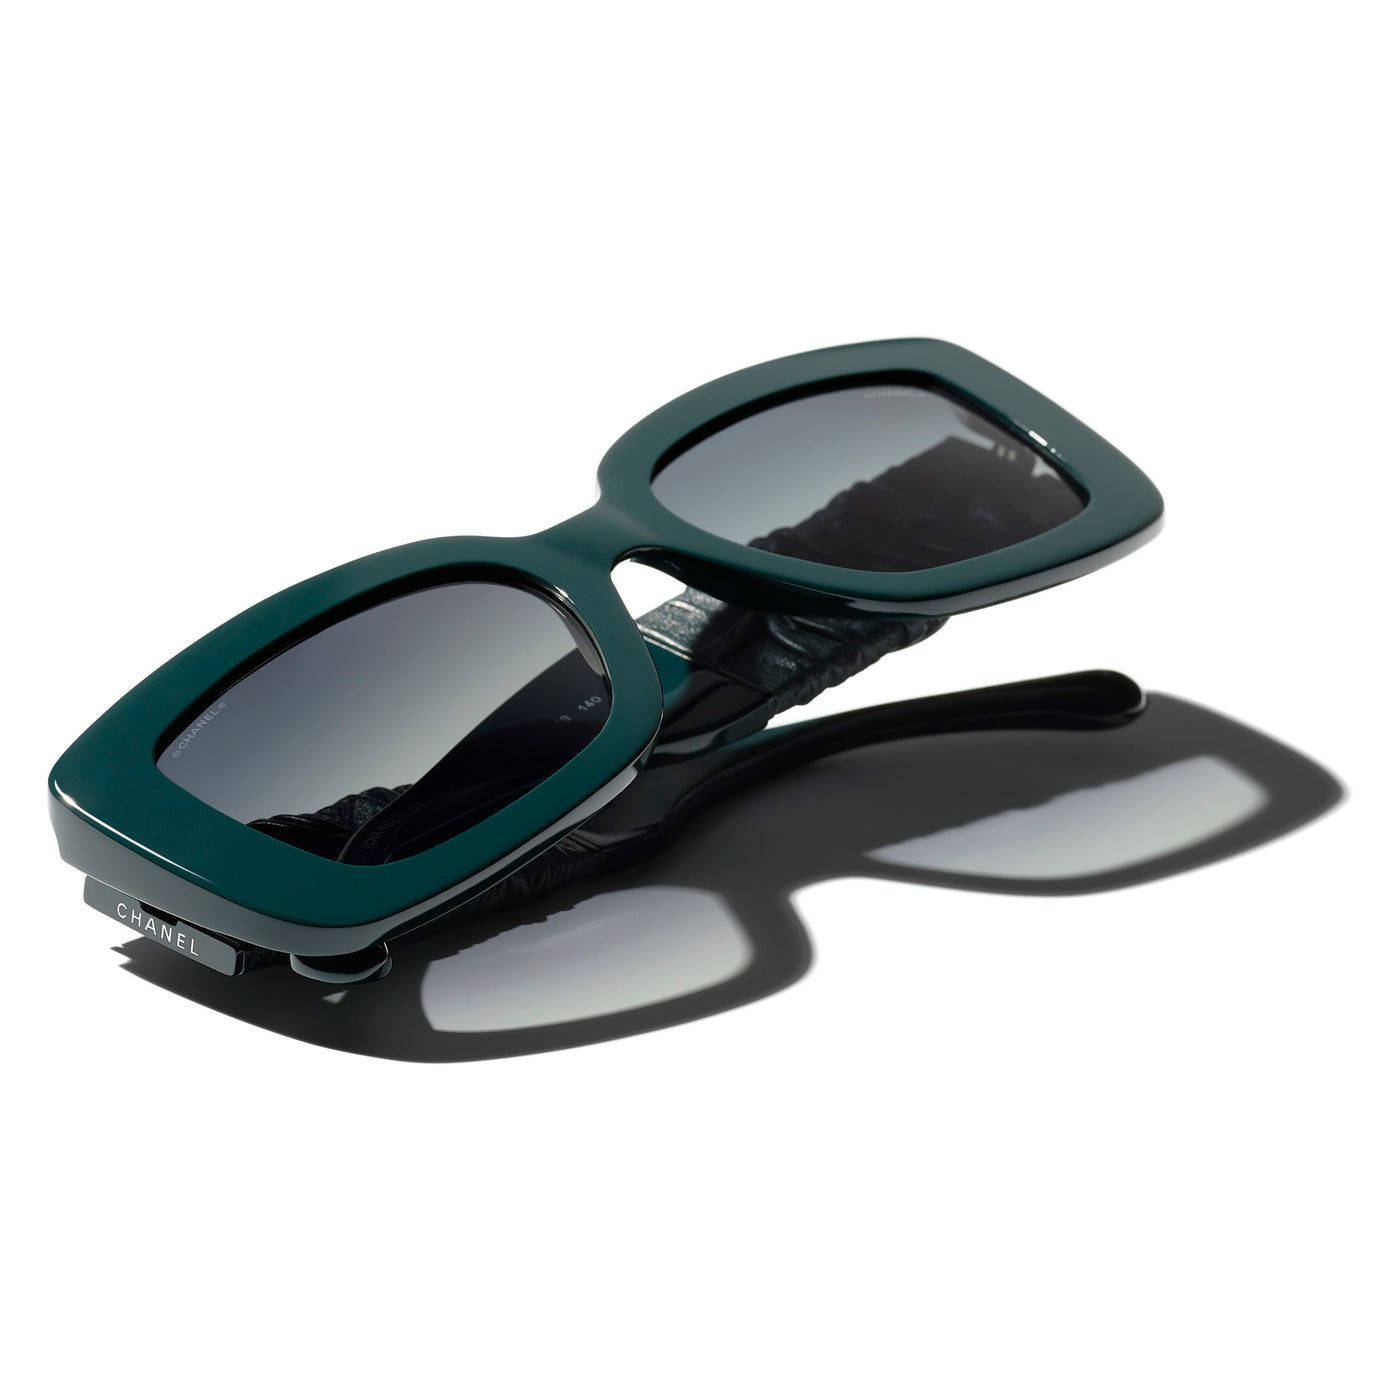 Chanel Black Acetate Pleated Leather Polarized Sunglasses 5473-Q